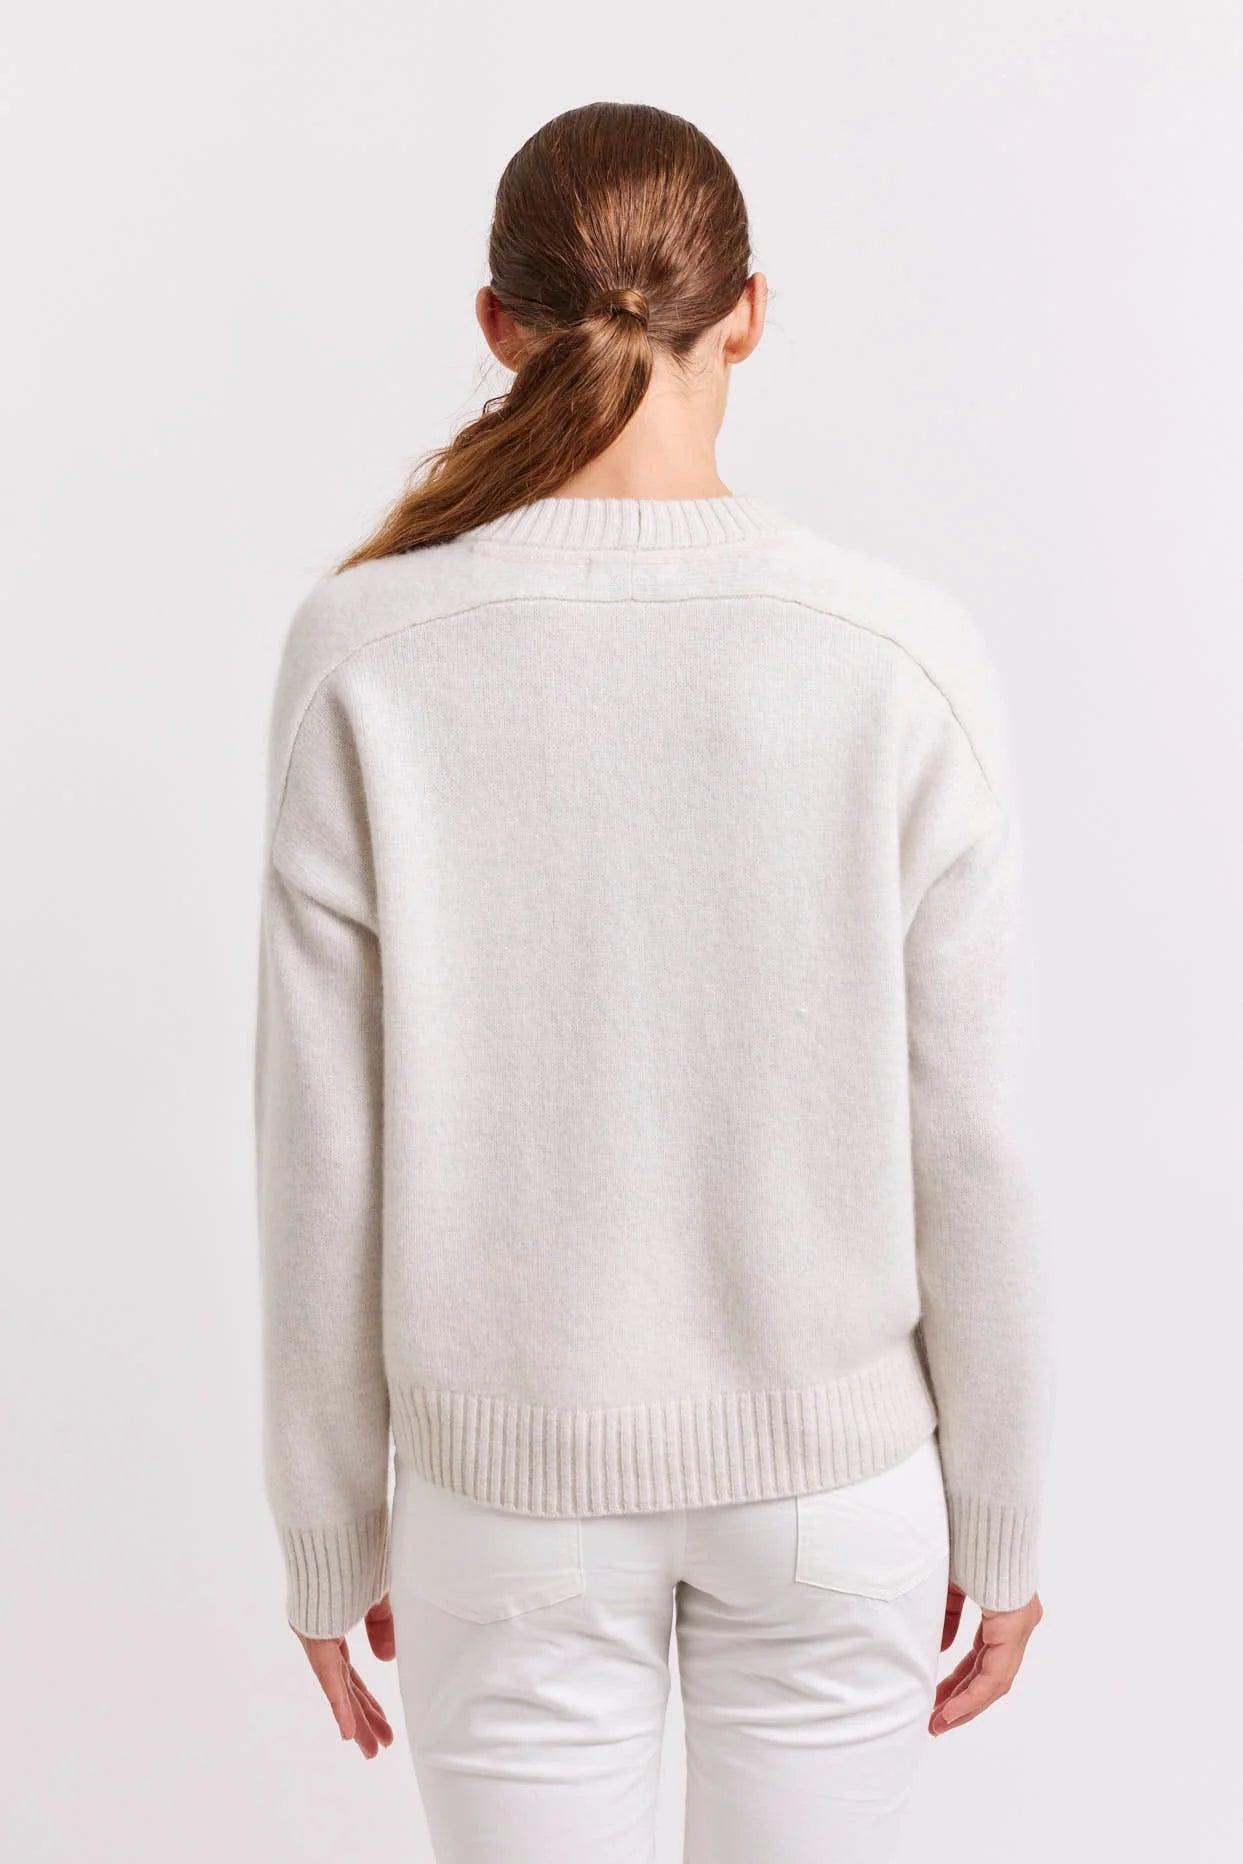 Blair Sweater Foil